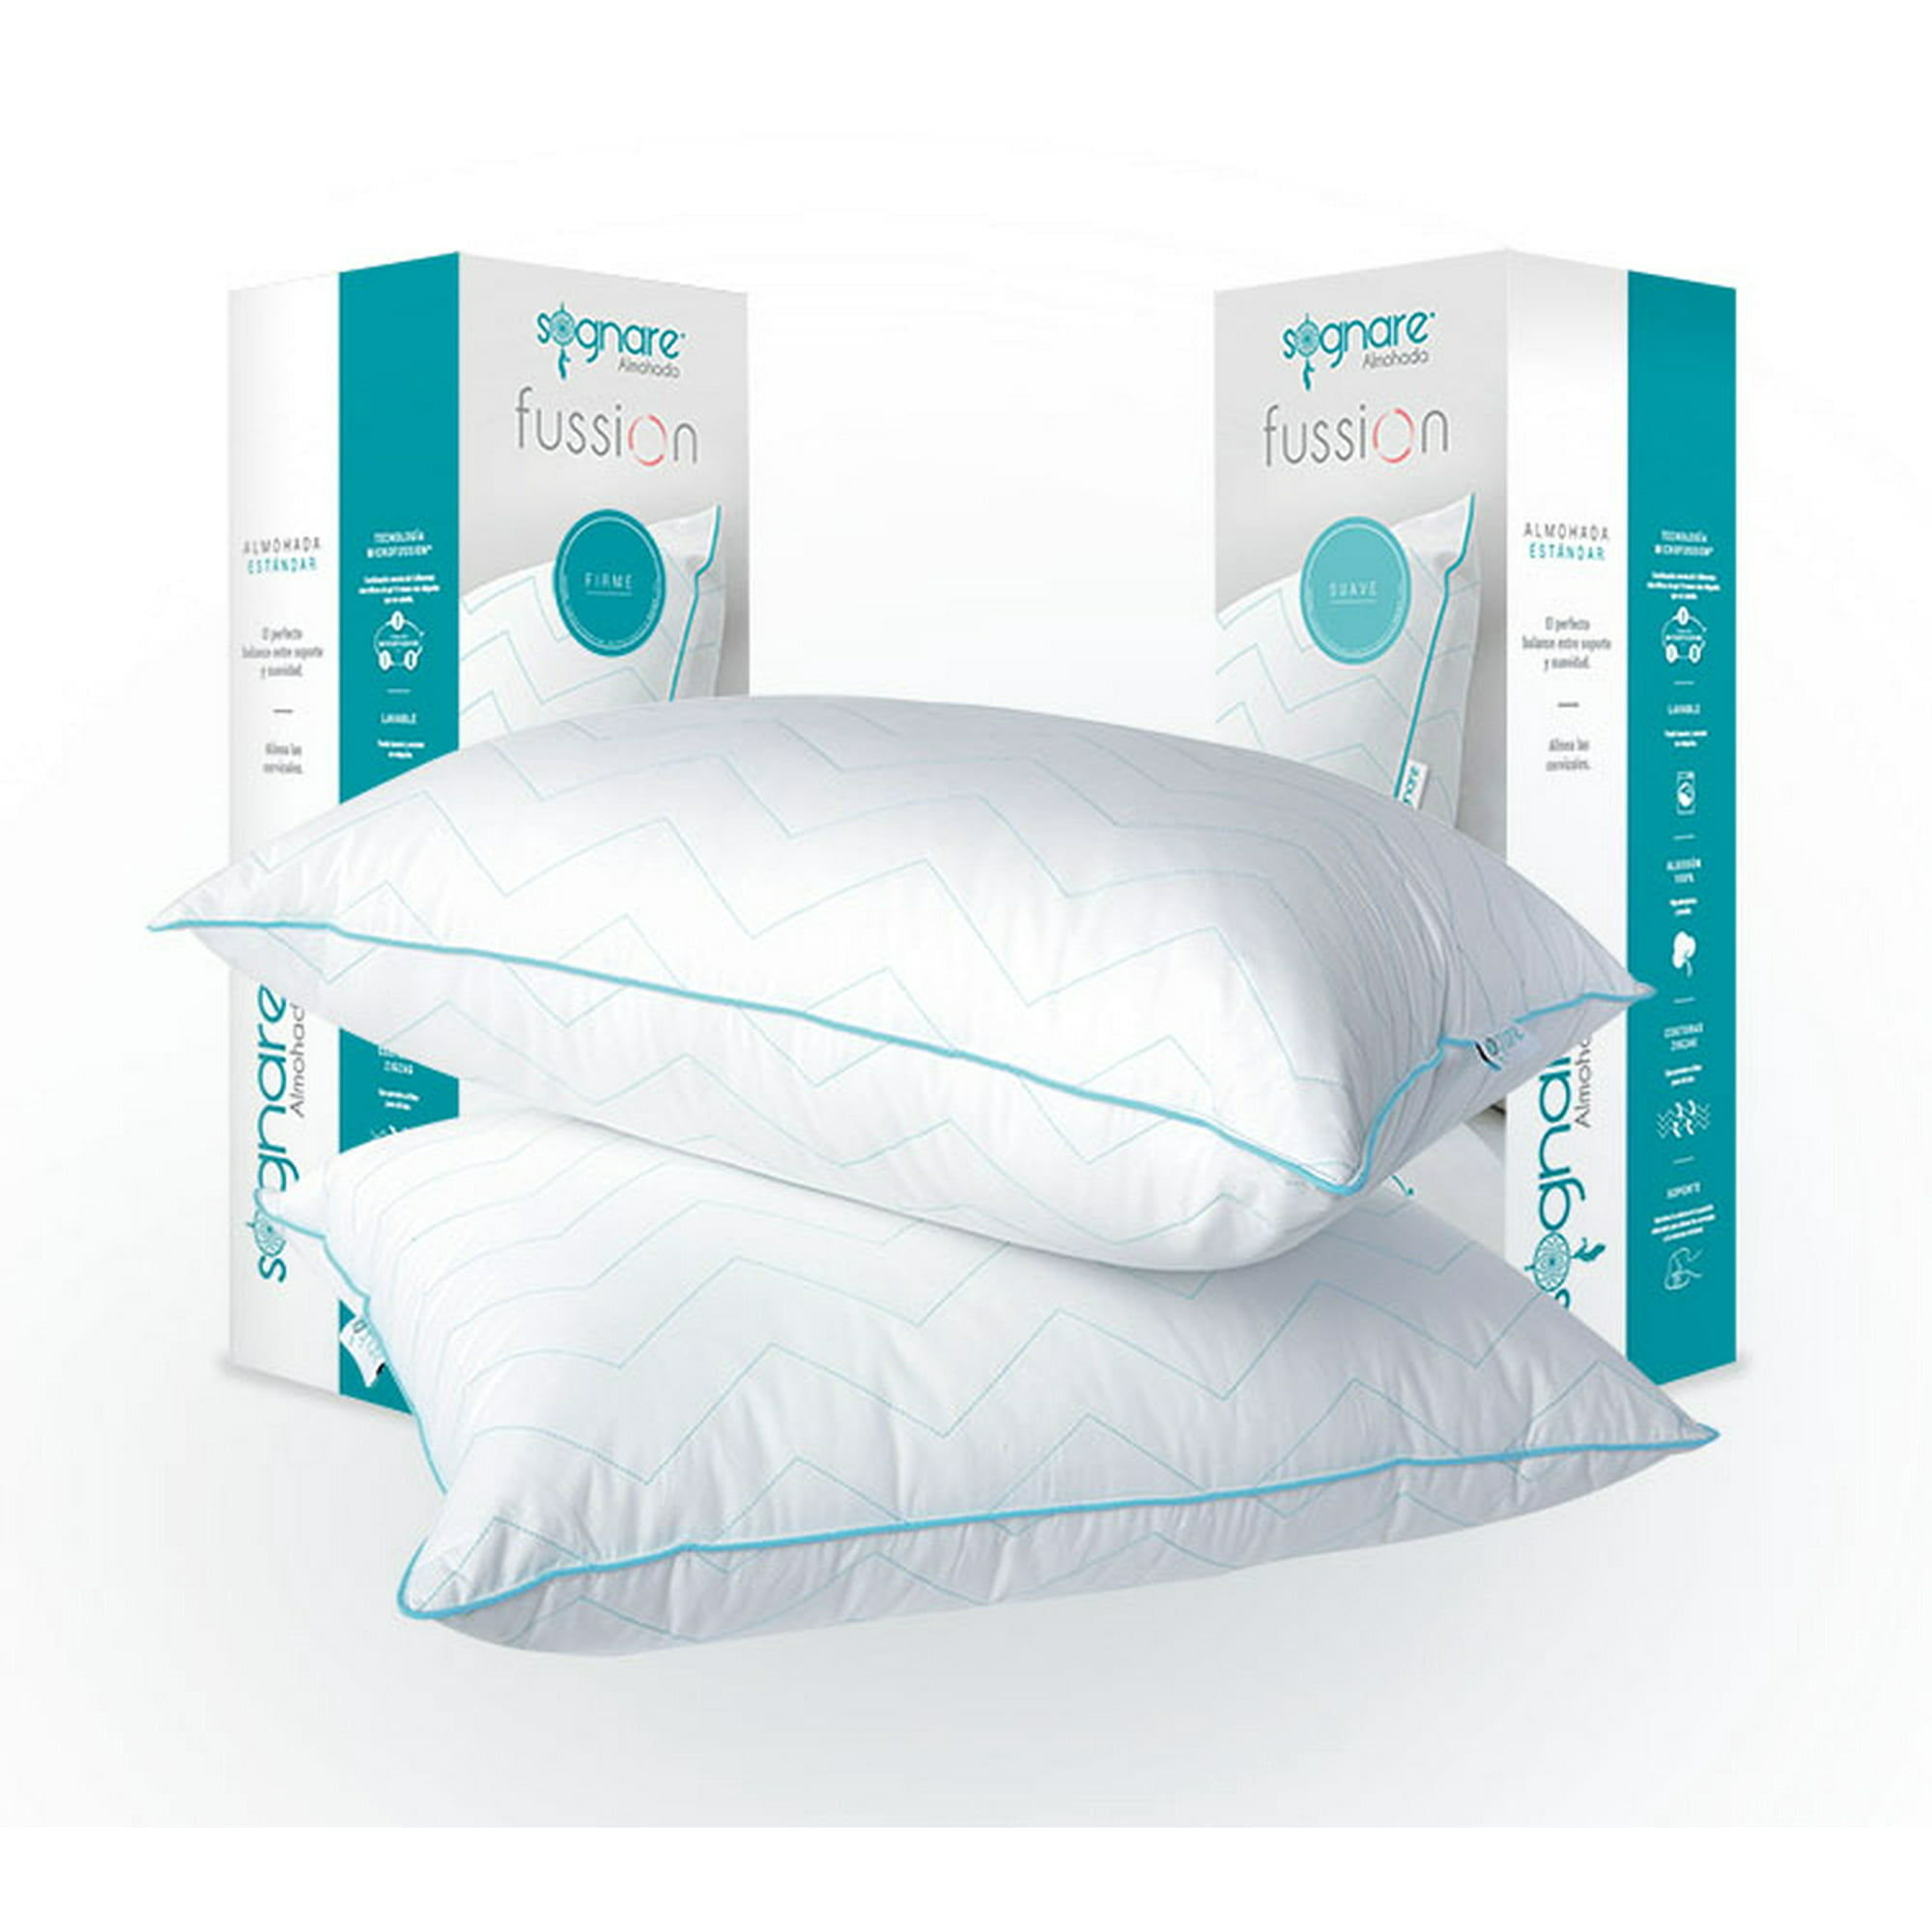 Sognare® almohada estándar fussion 2 pack: 1 firme + 1 suave sognare estándar suave estándar firme